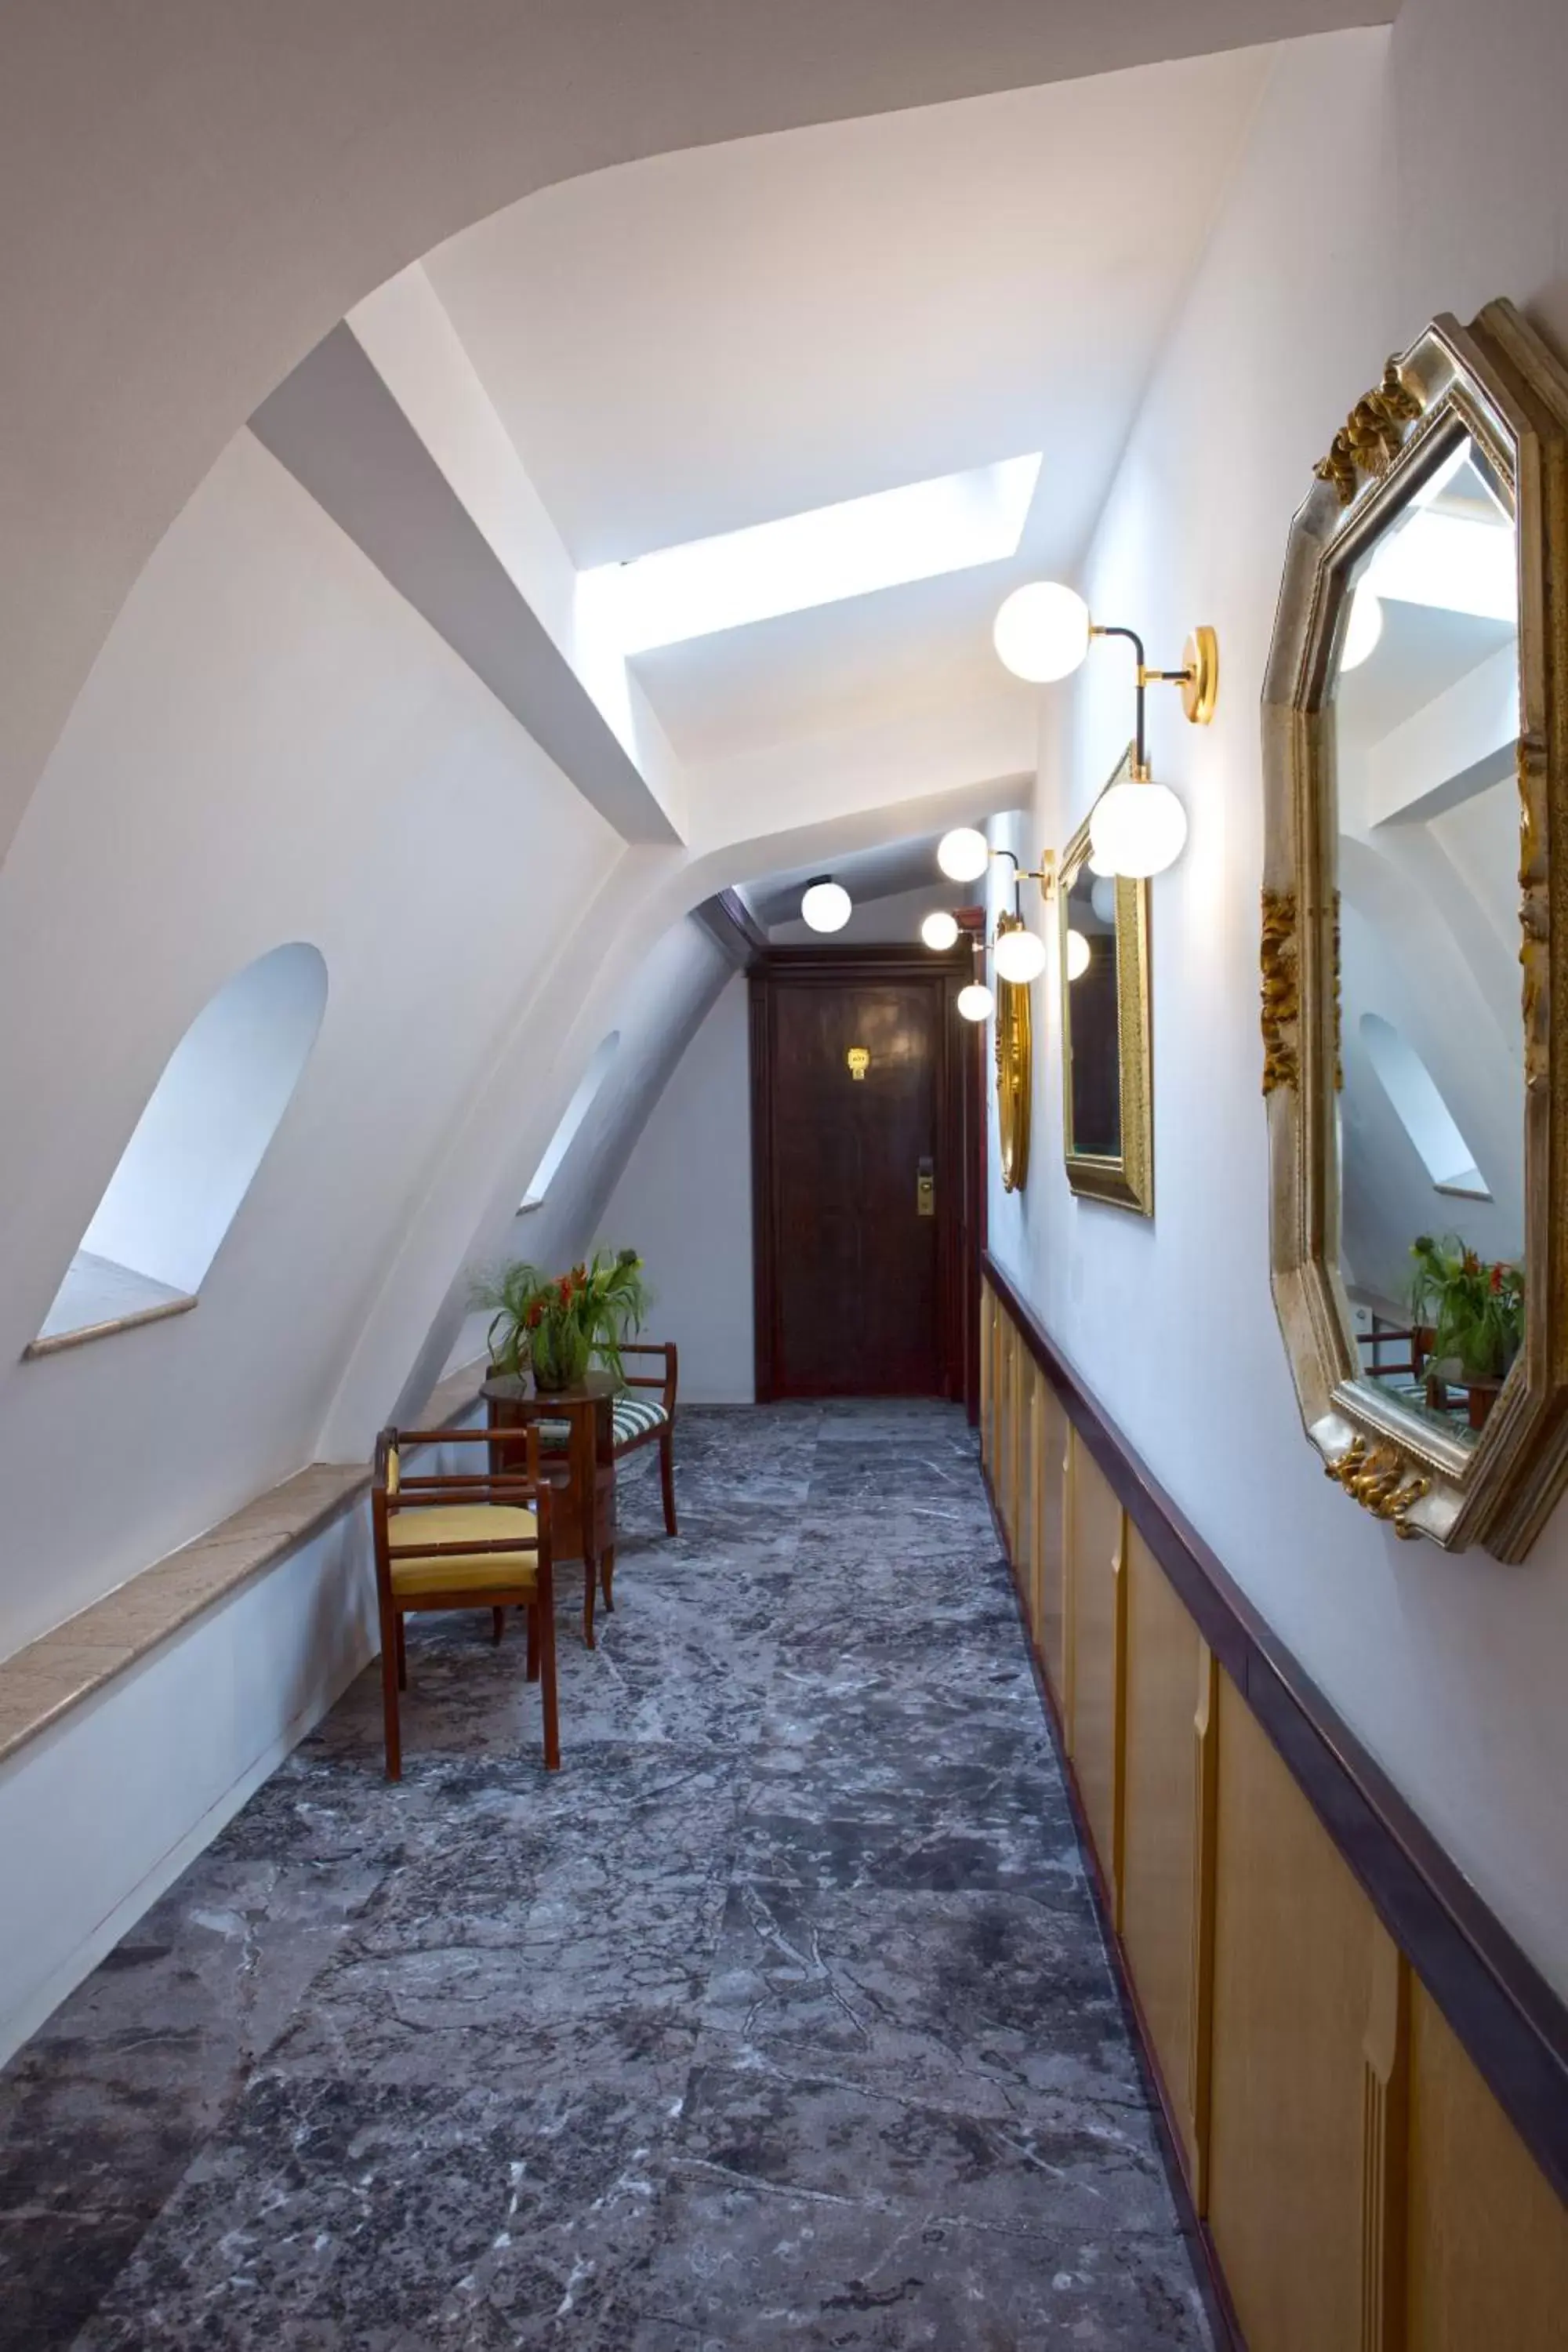 Area and facilities, Lobby/Reception in Hotel Venezia by Zeus International